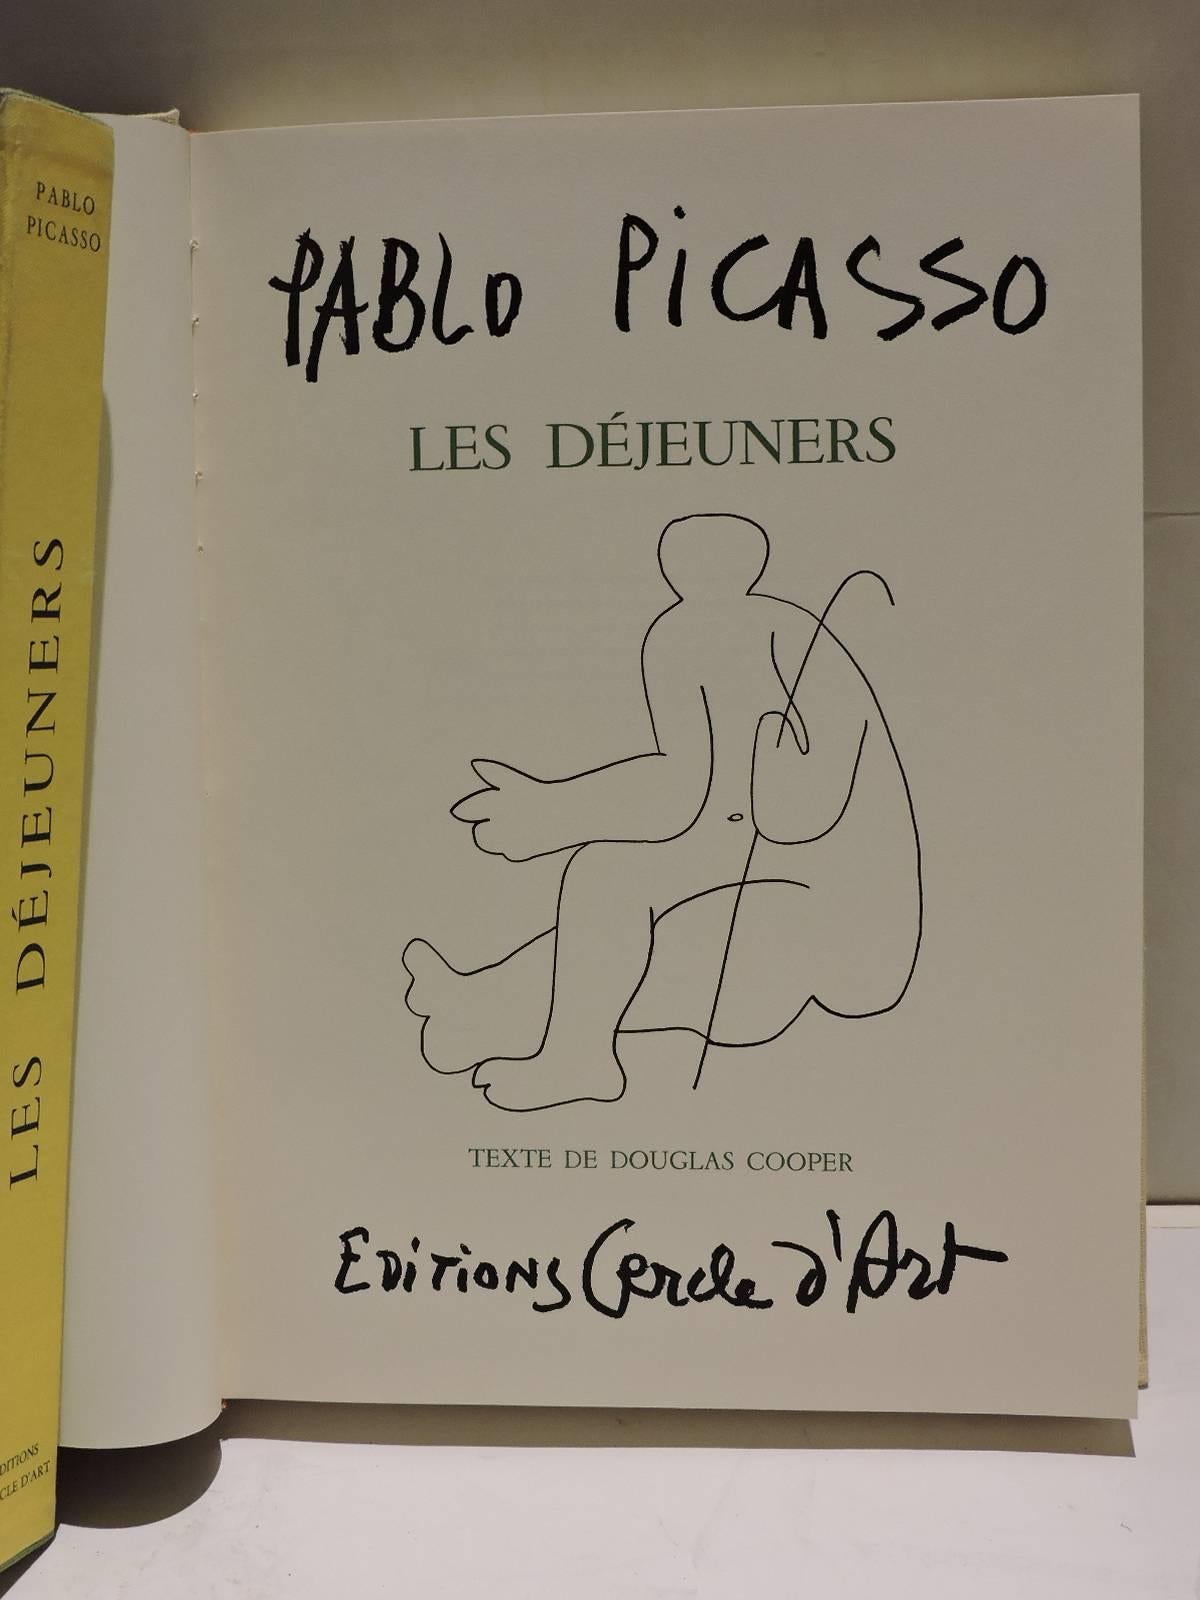 French Picasso, Les Dejeuners, Editions Cercle D'Art, Paris, 1962, First Edition